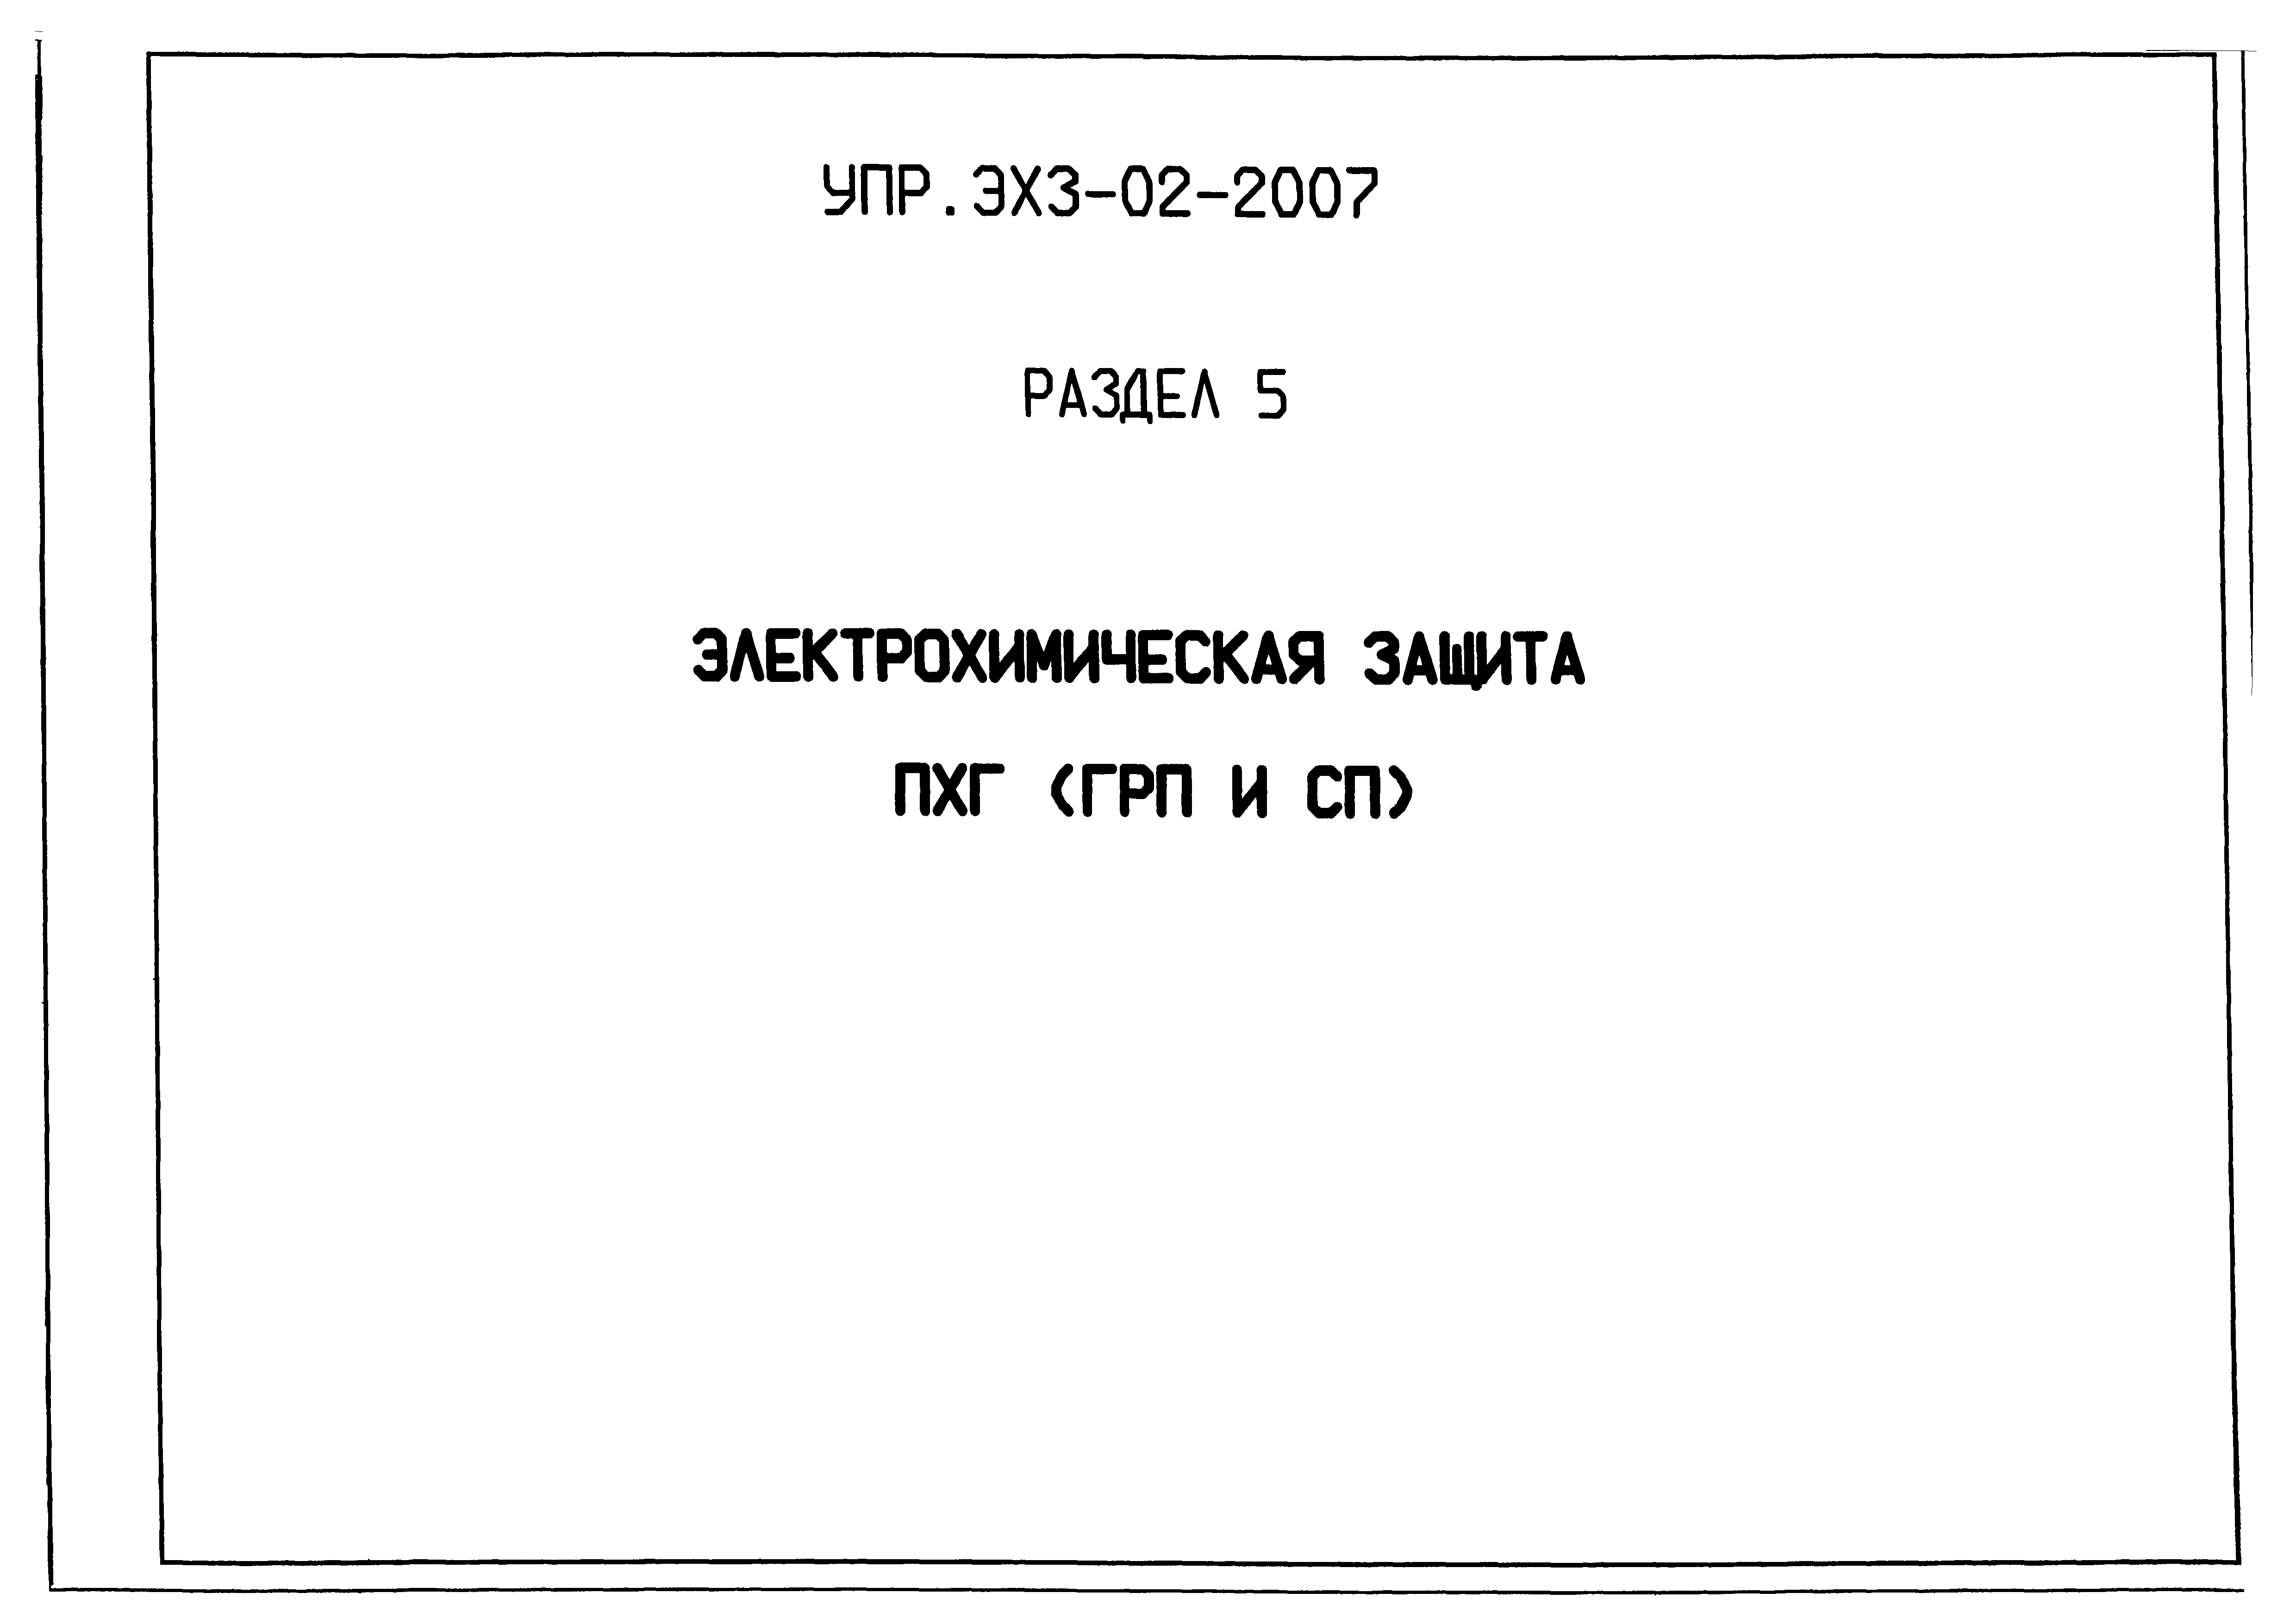 Альбом УПР.ЭХЗ-02-2007